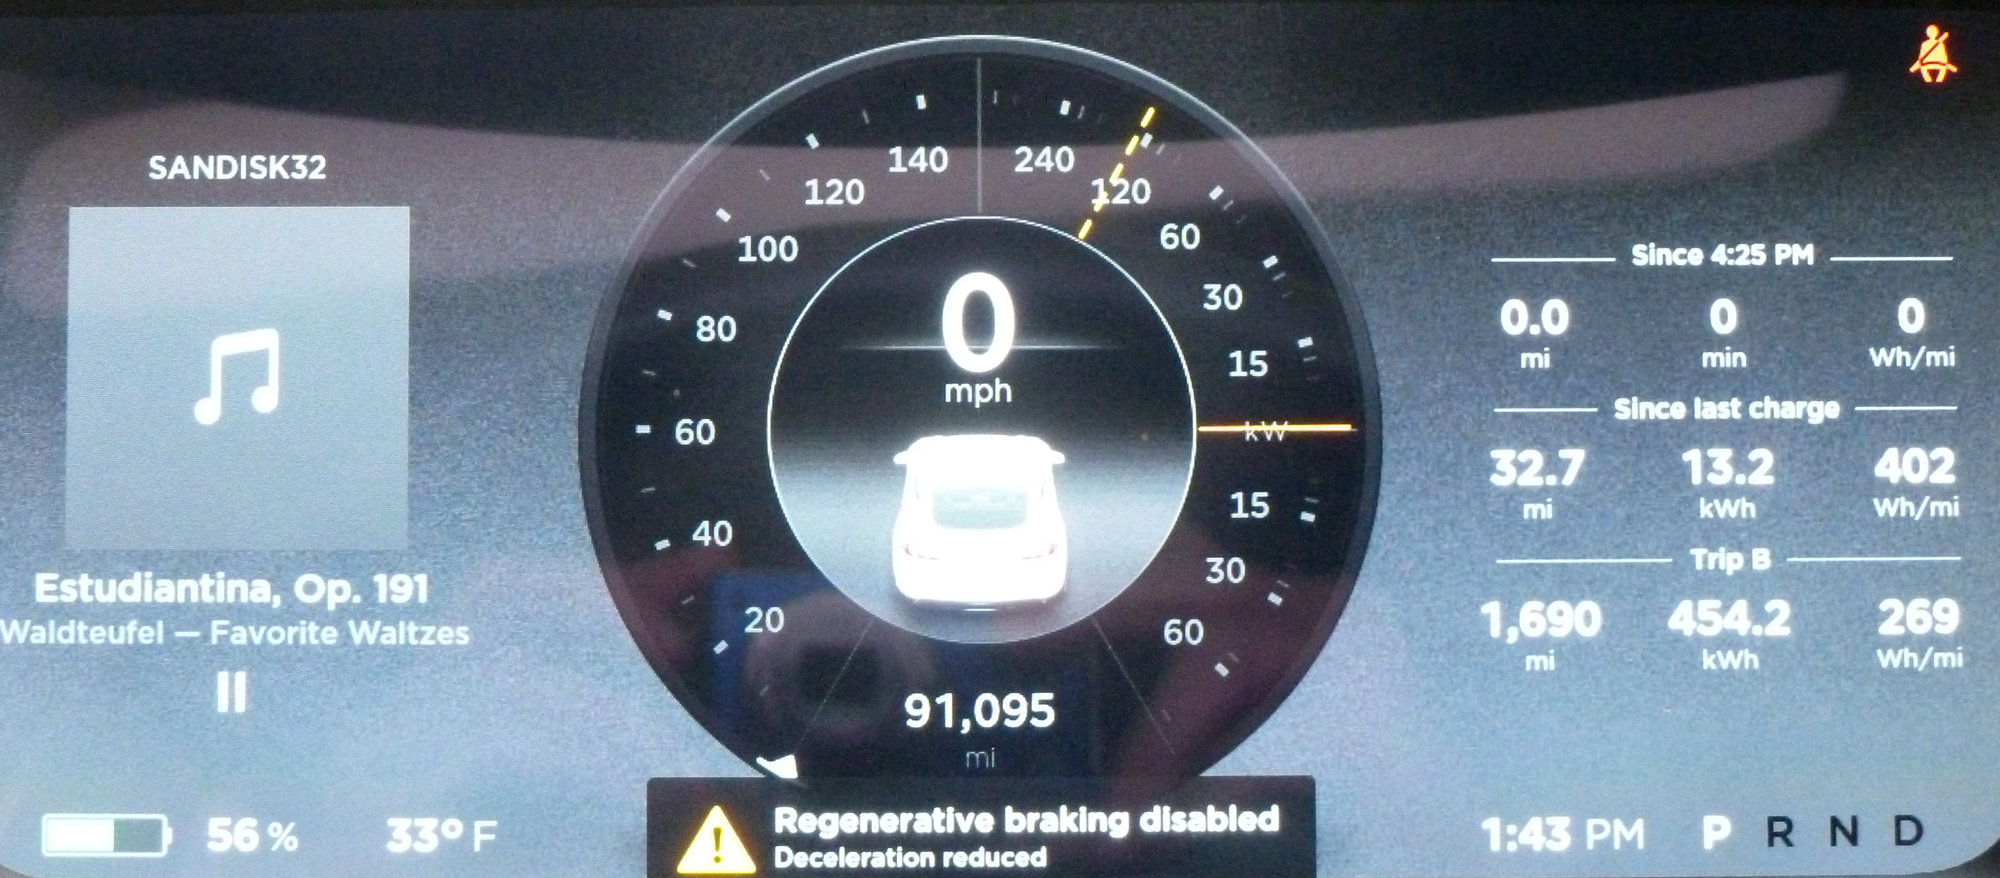 Model S regen braking disabled2325crop 12-30-19.JPG